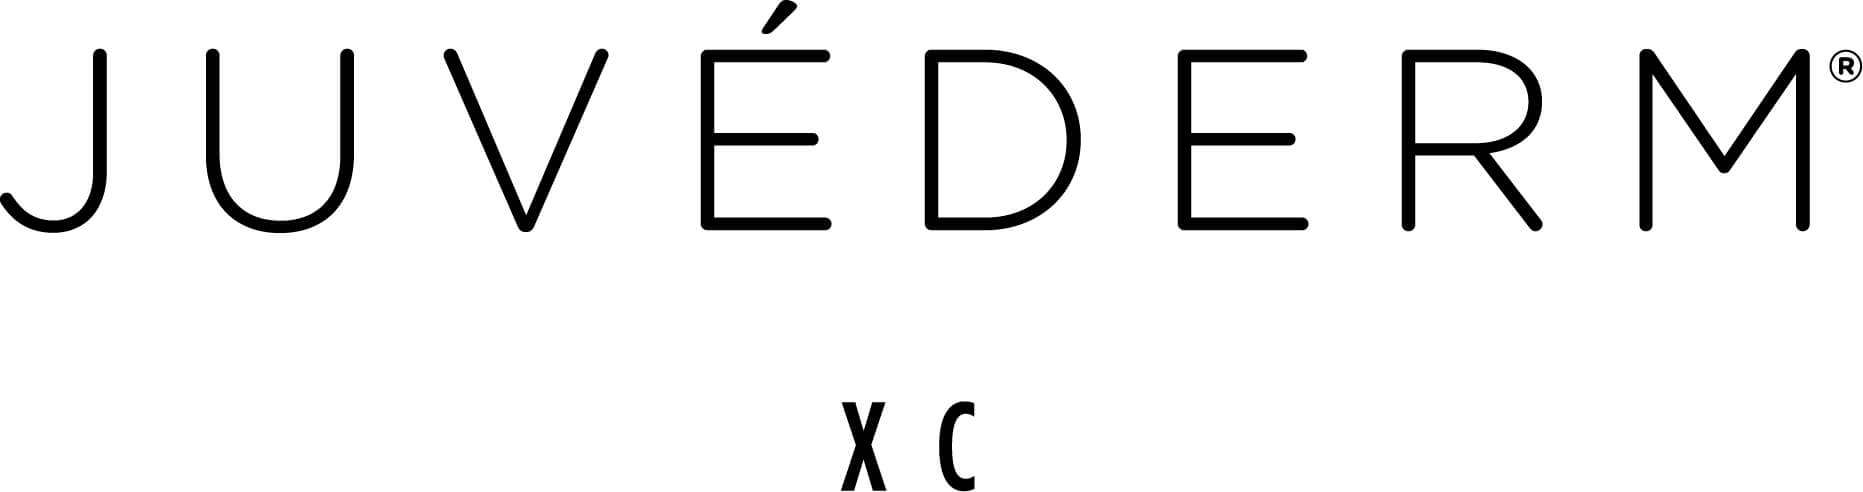 Denver Skin Care Clinic and Medical Spa Juvéderm Juvederm XC logo